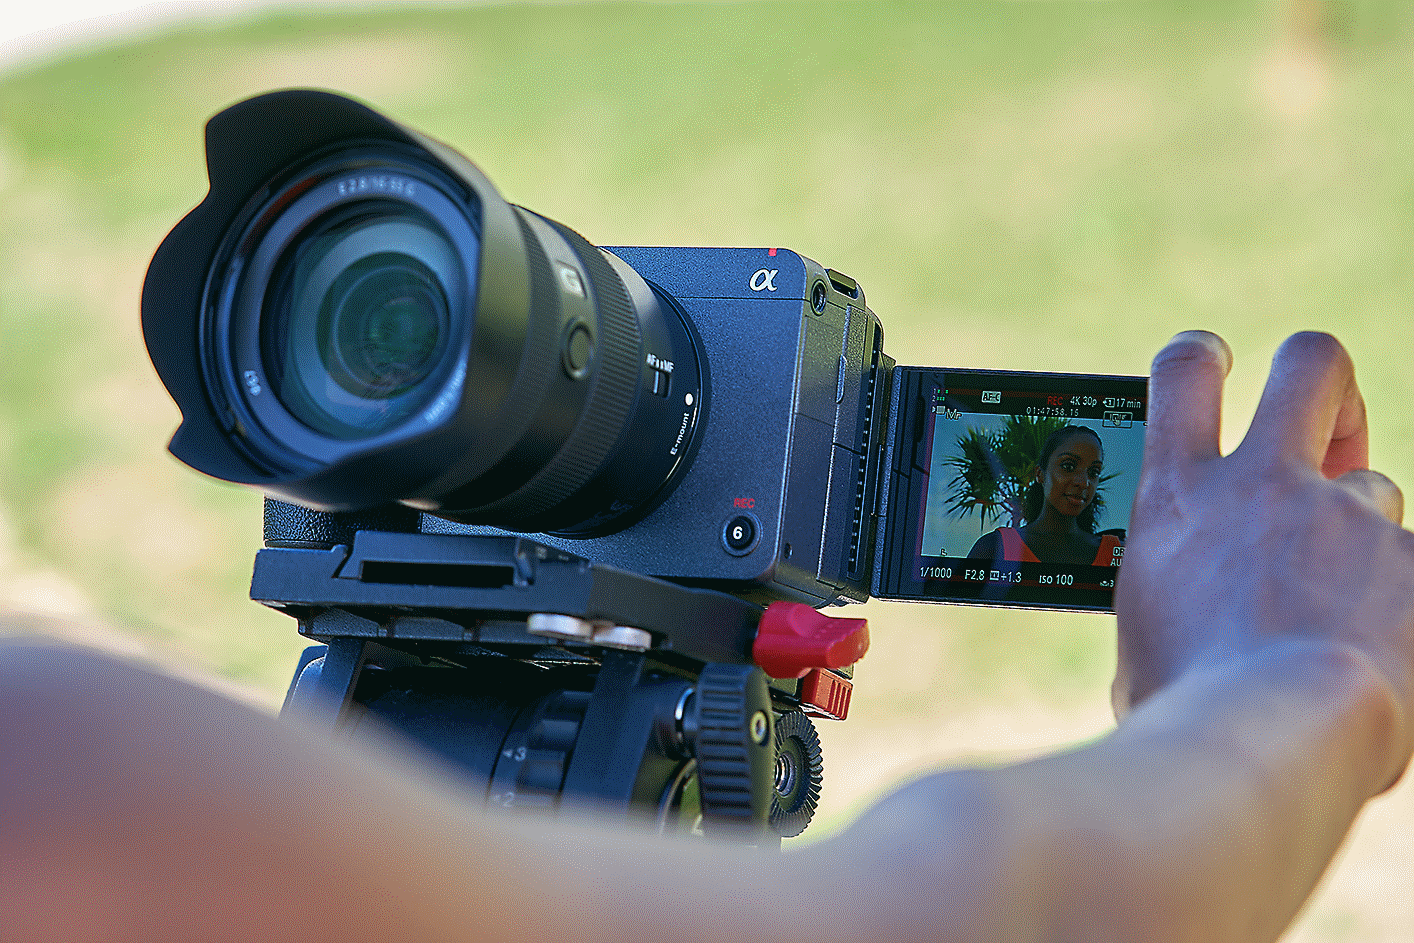 Camera operator holding monitor